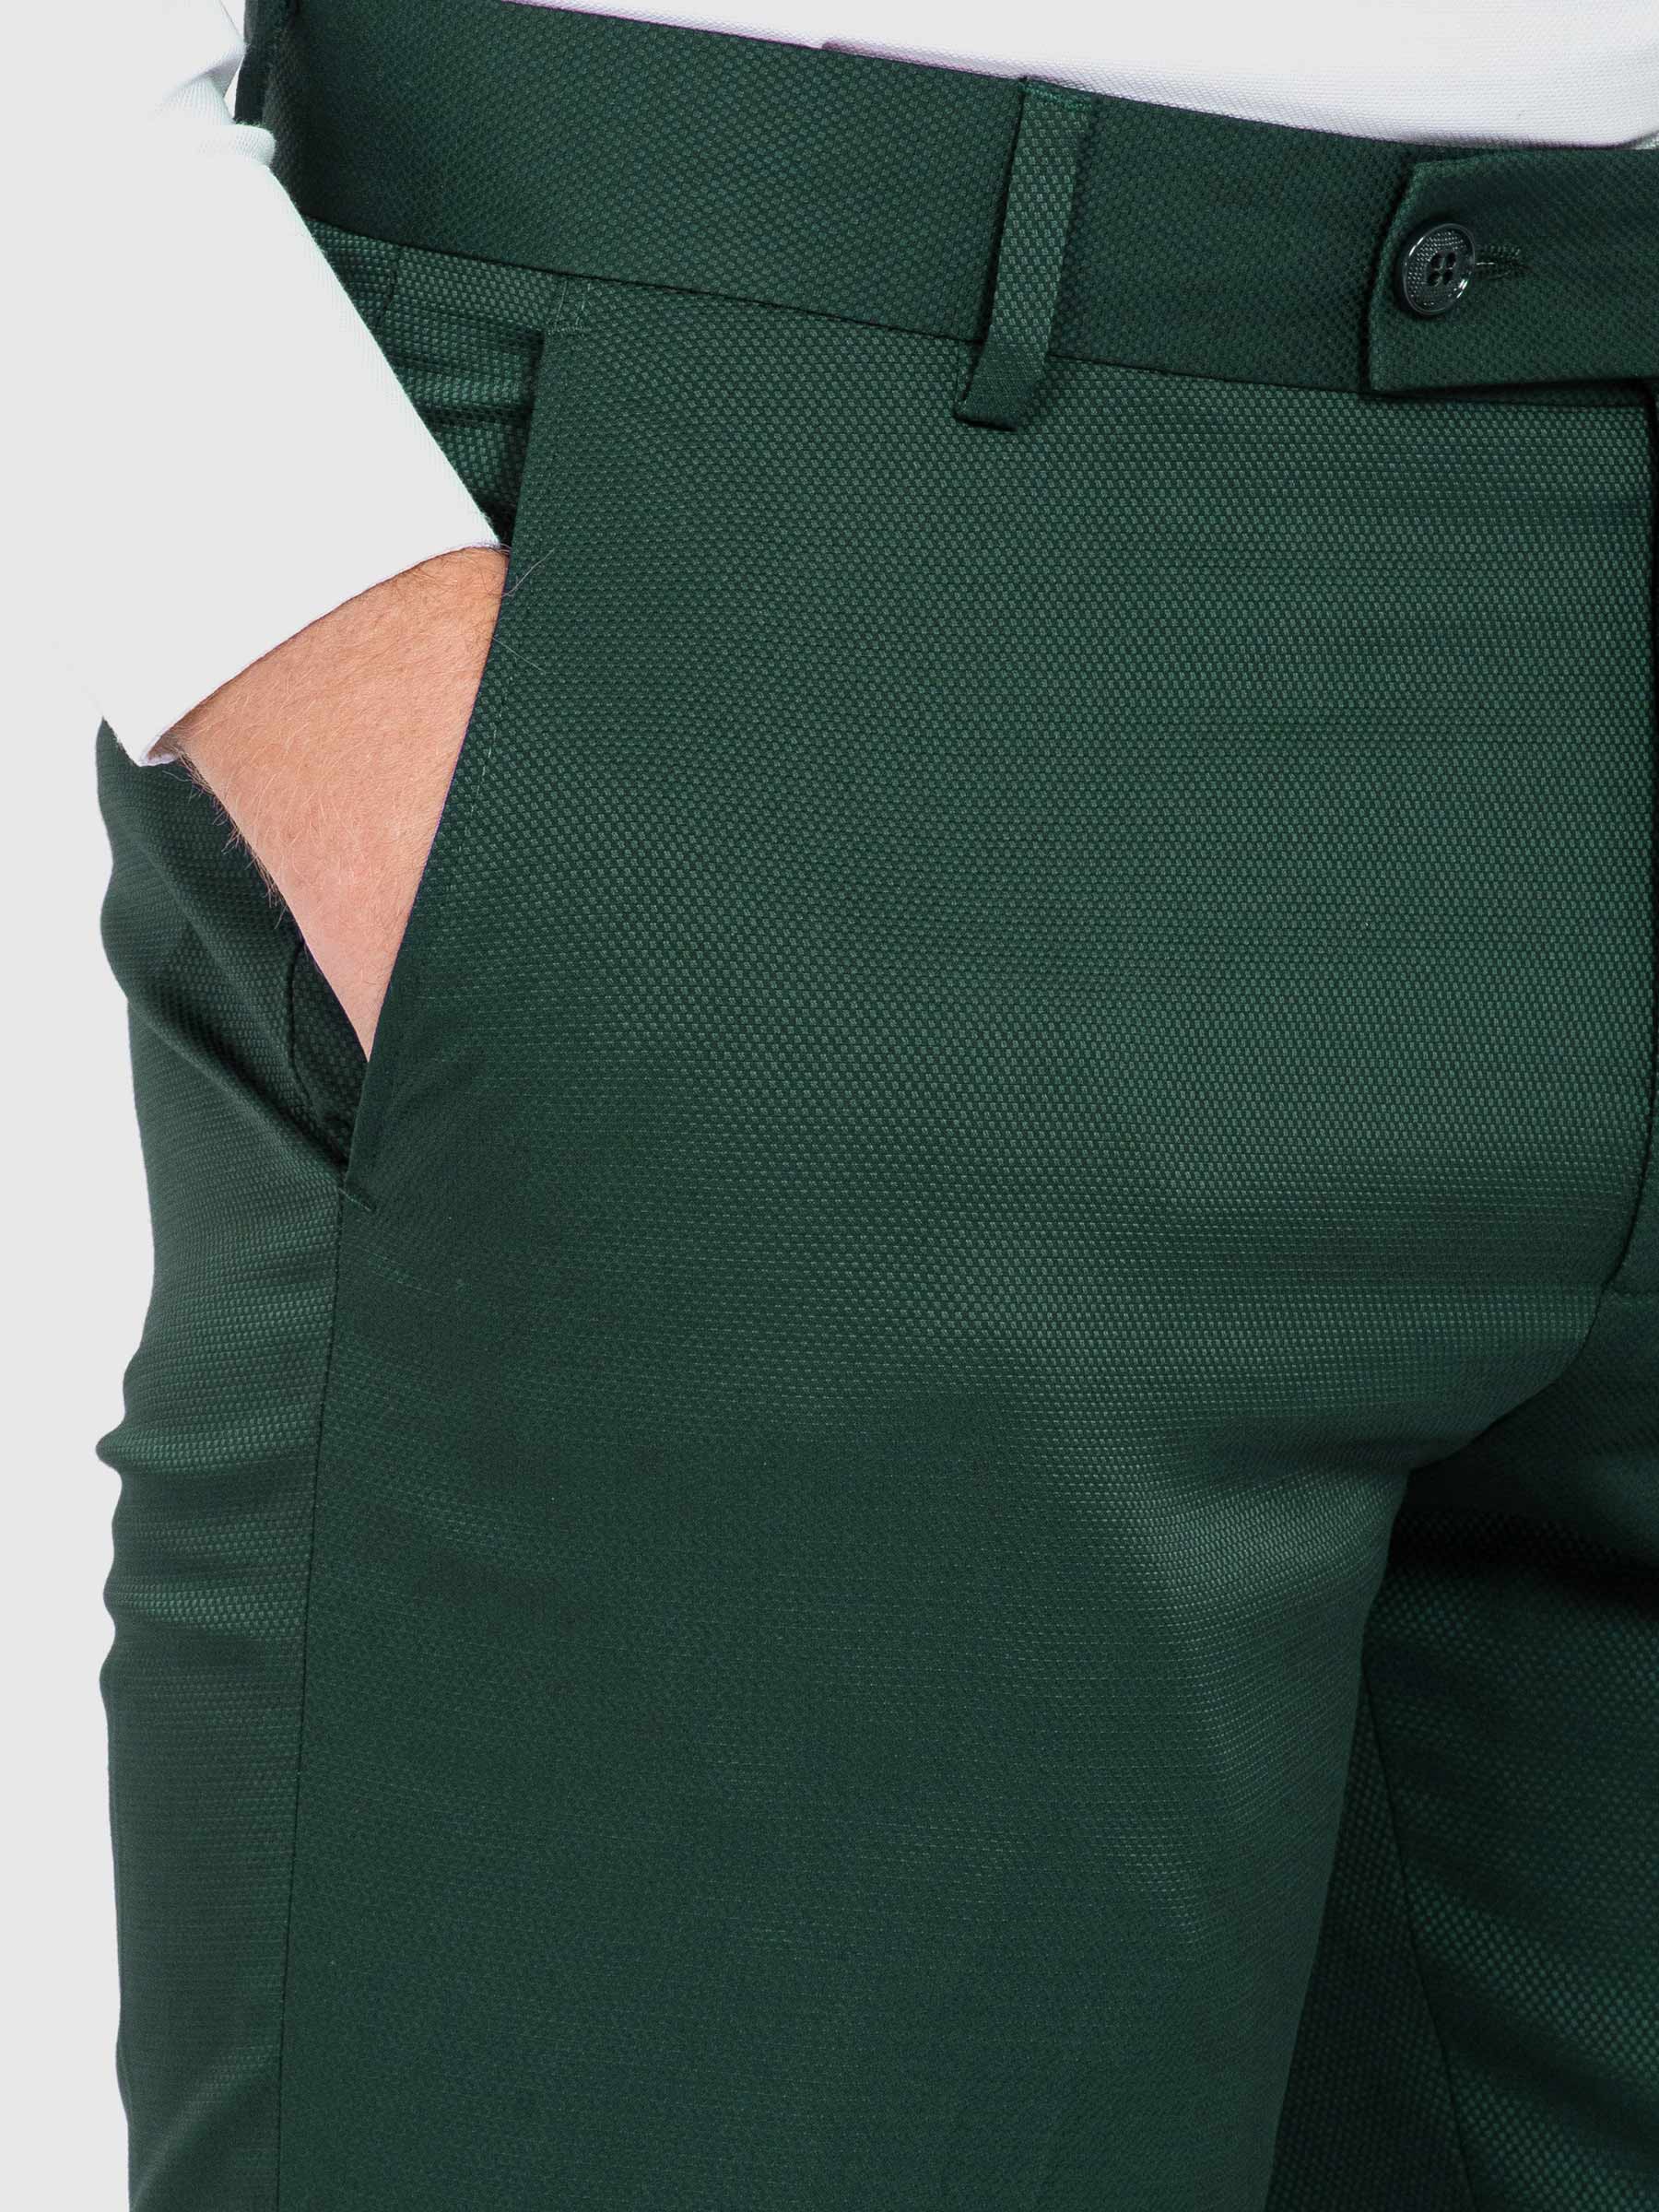 Concitor Men's Dress Pants Trousers Flat Front Slacks Emerald Green Color  28 at Amazon Men's Clothing store